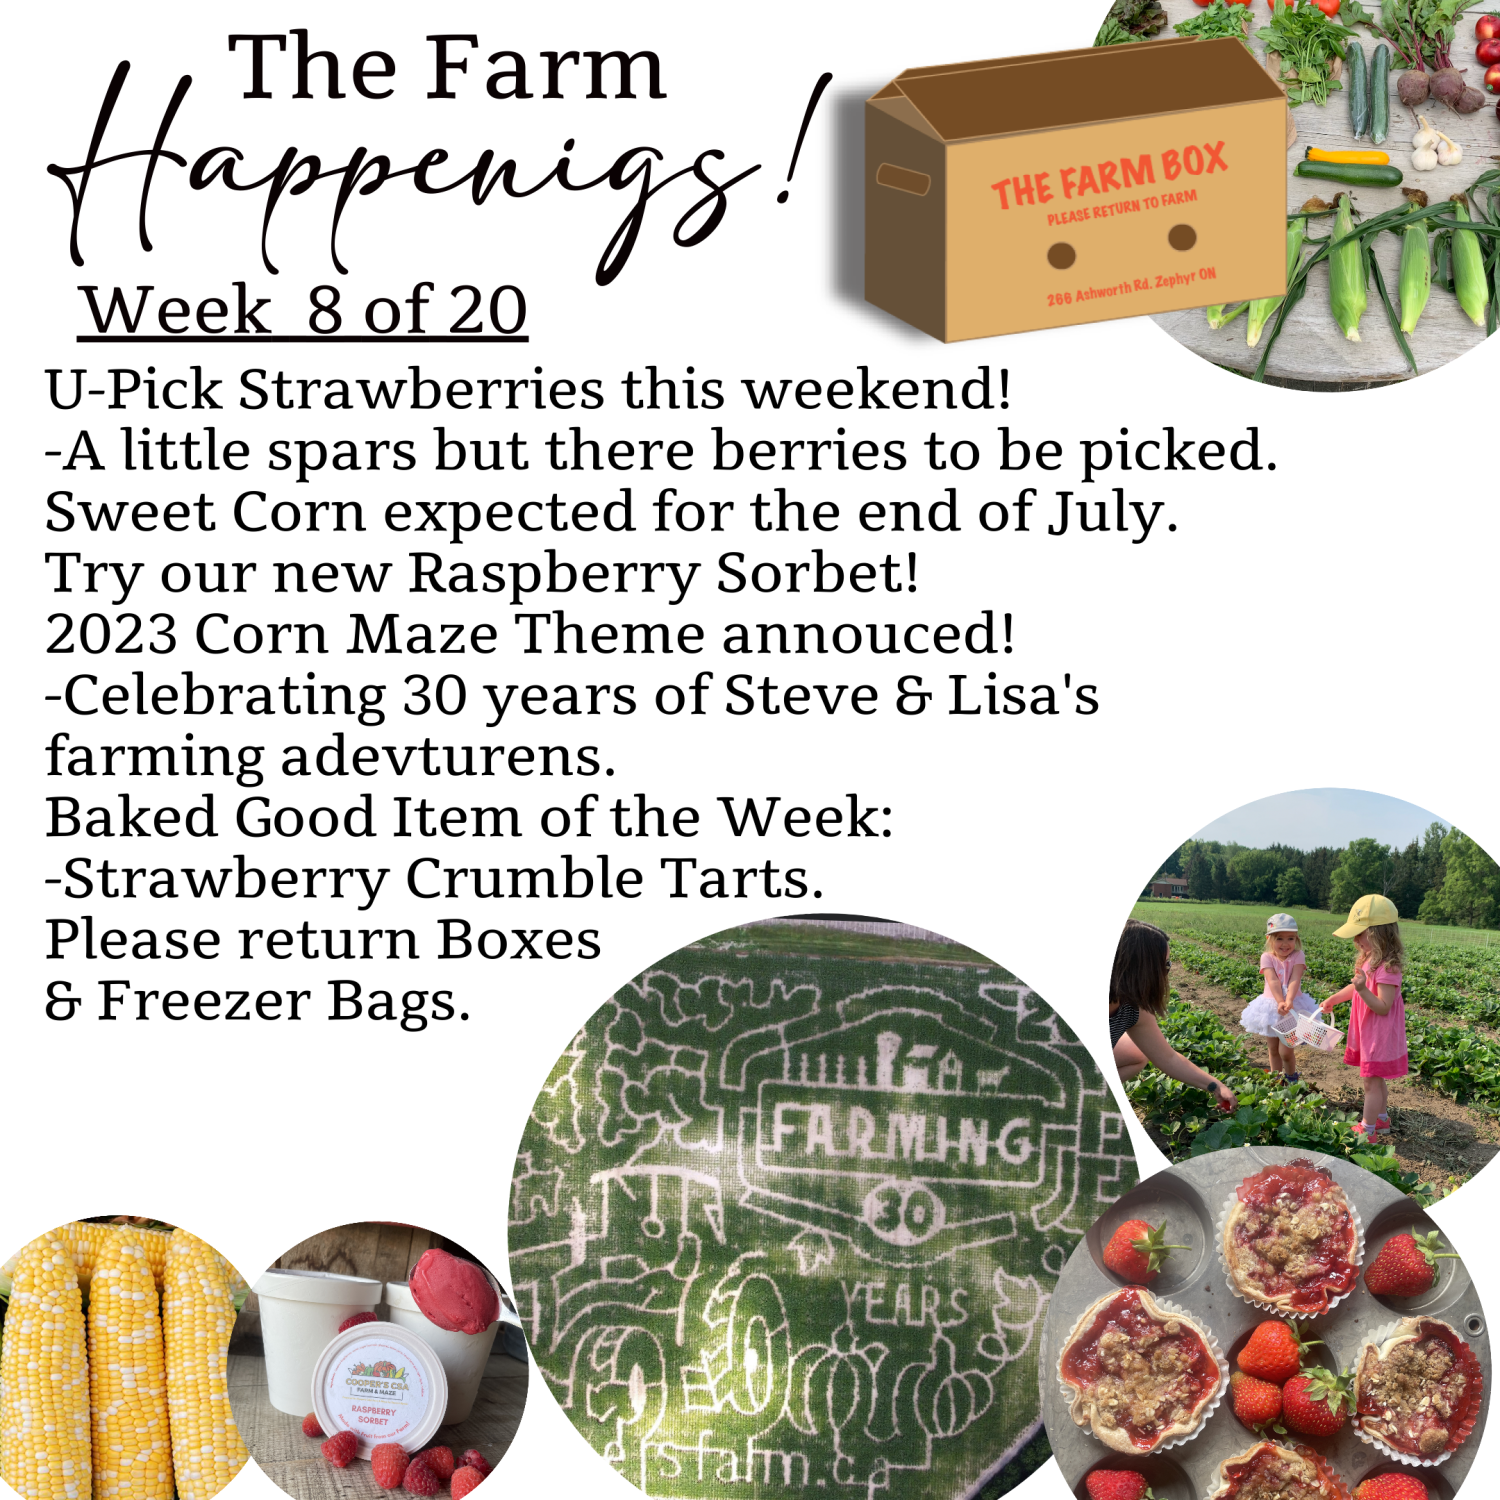 Next Happening: "The Farm Box"-Coopers CSA Farm Farm Happenings Week 8